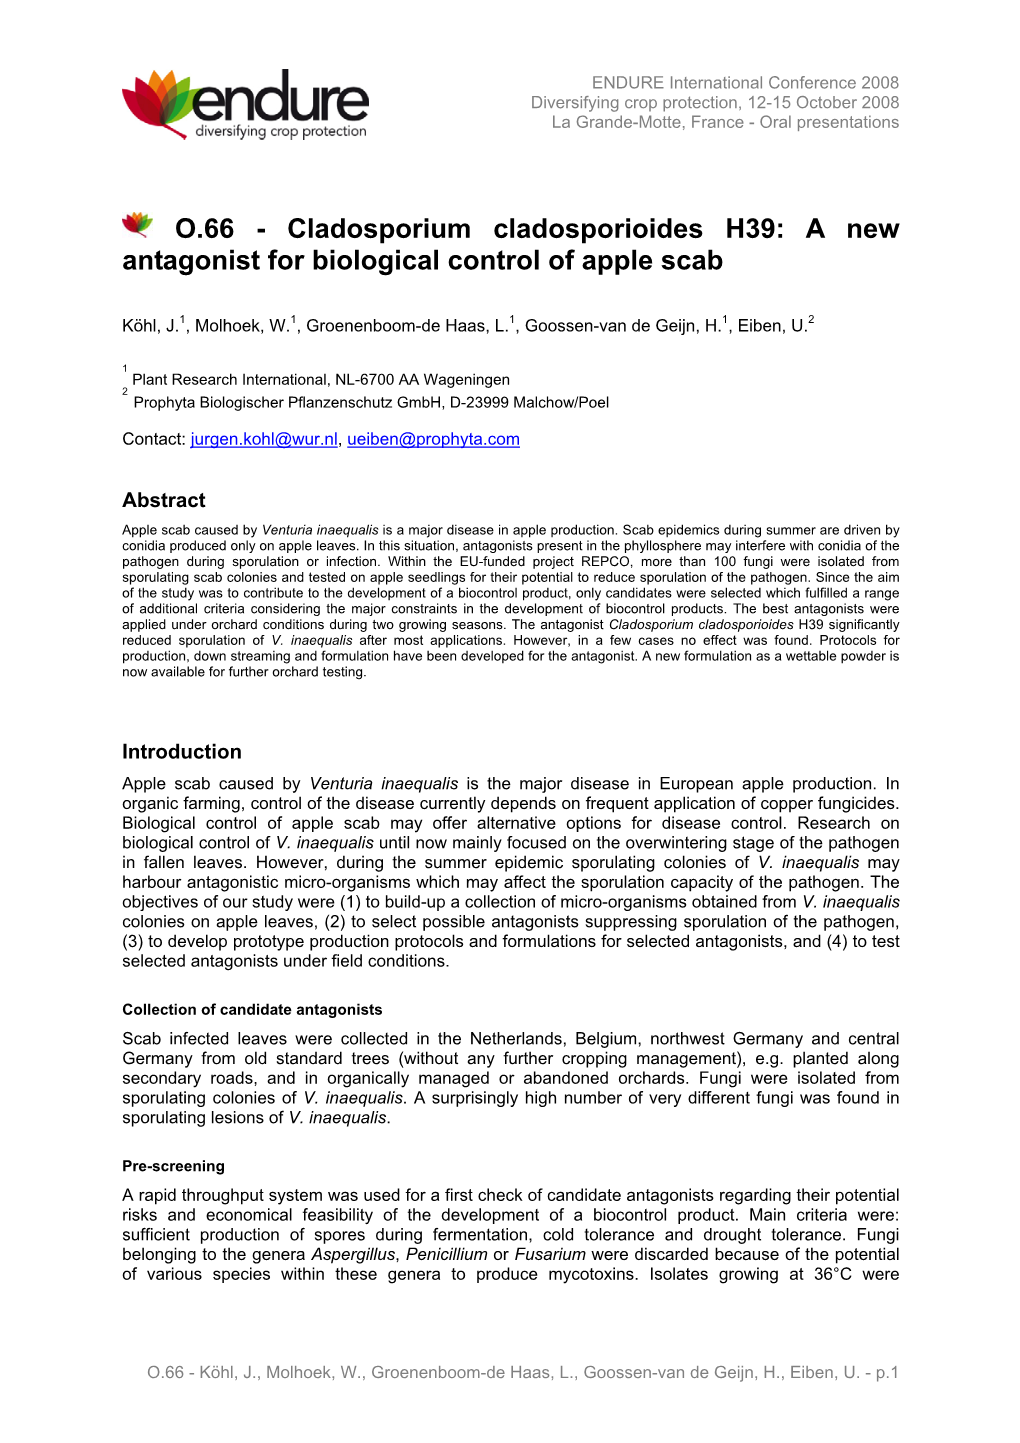 Cladosporium Cladosporioides H39: a New Antagonist for Biological Control of Apple Scab